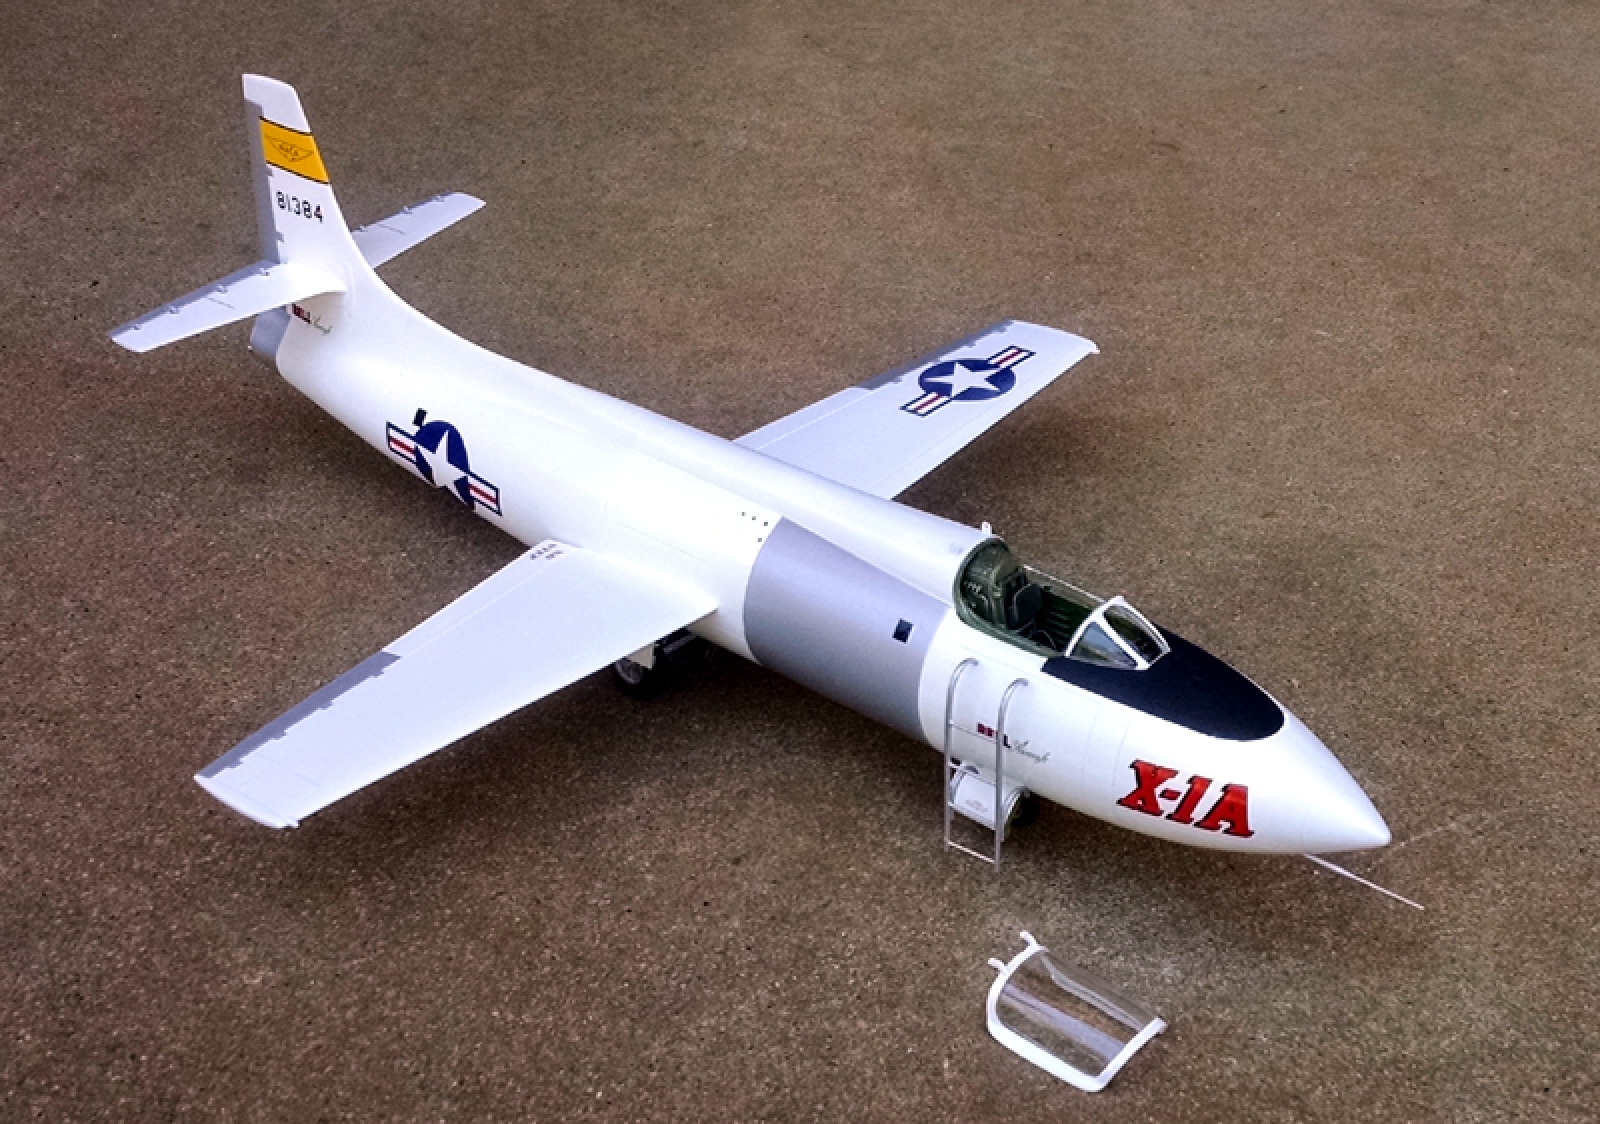 Bell® X-1 Mach Buster - Rocket Plane Mini-Kit